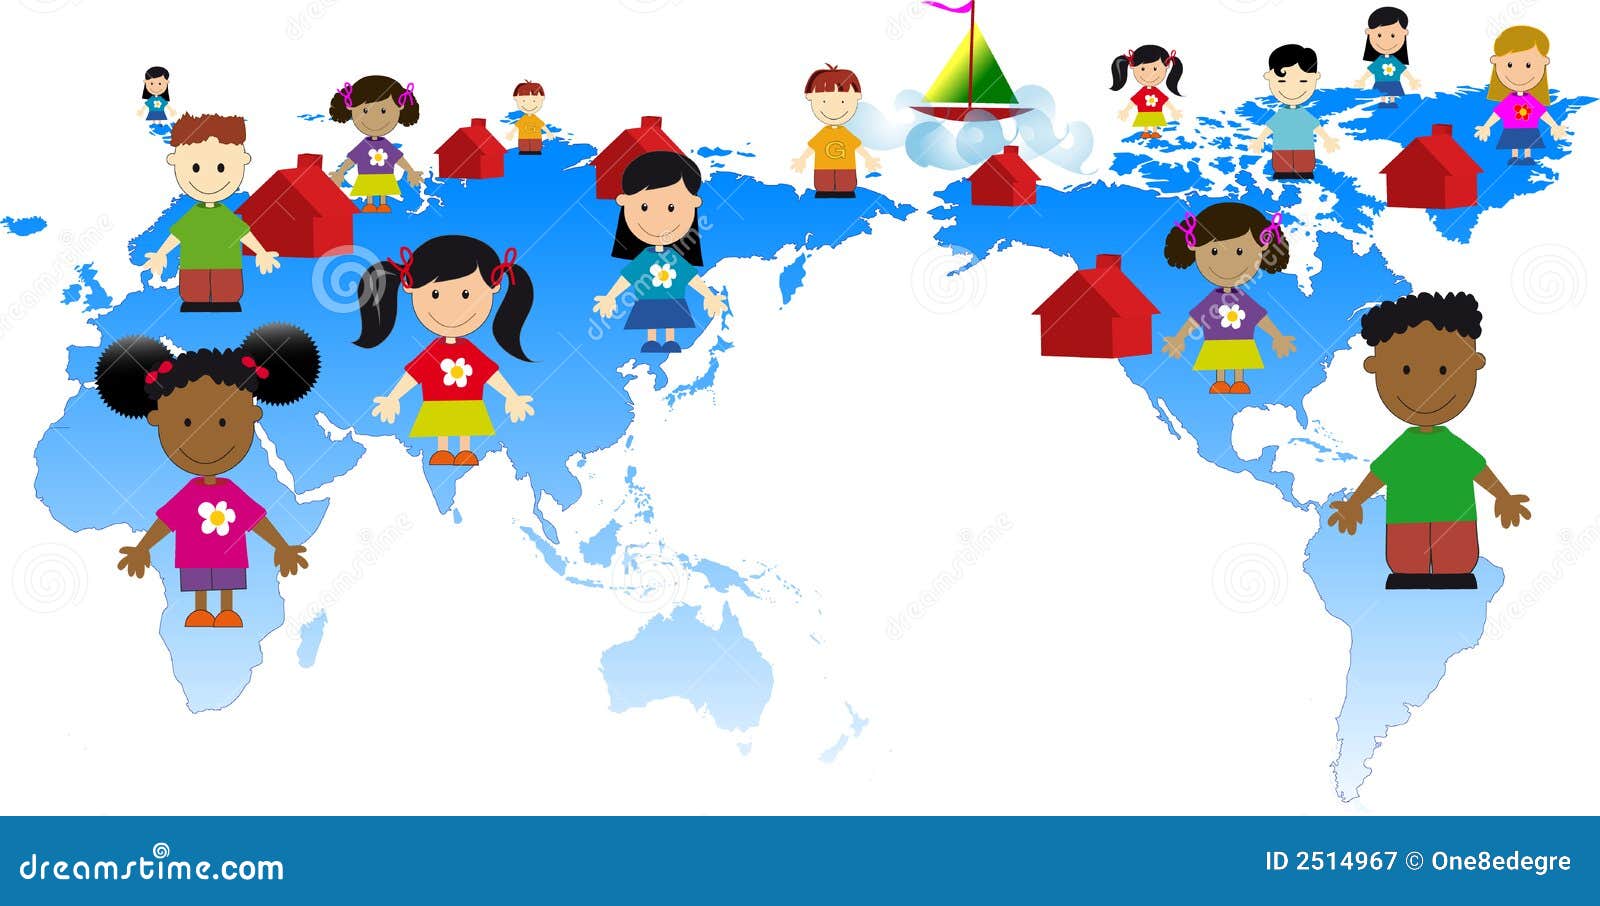 Global kids stock illustration. Illustration of diversity - 2514967